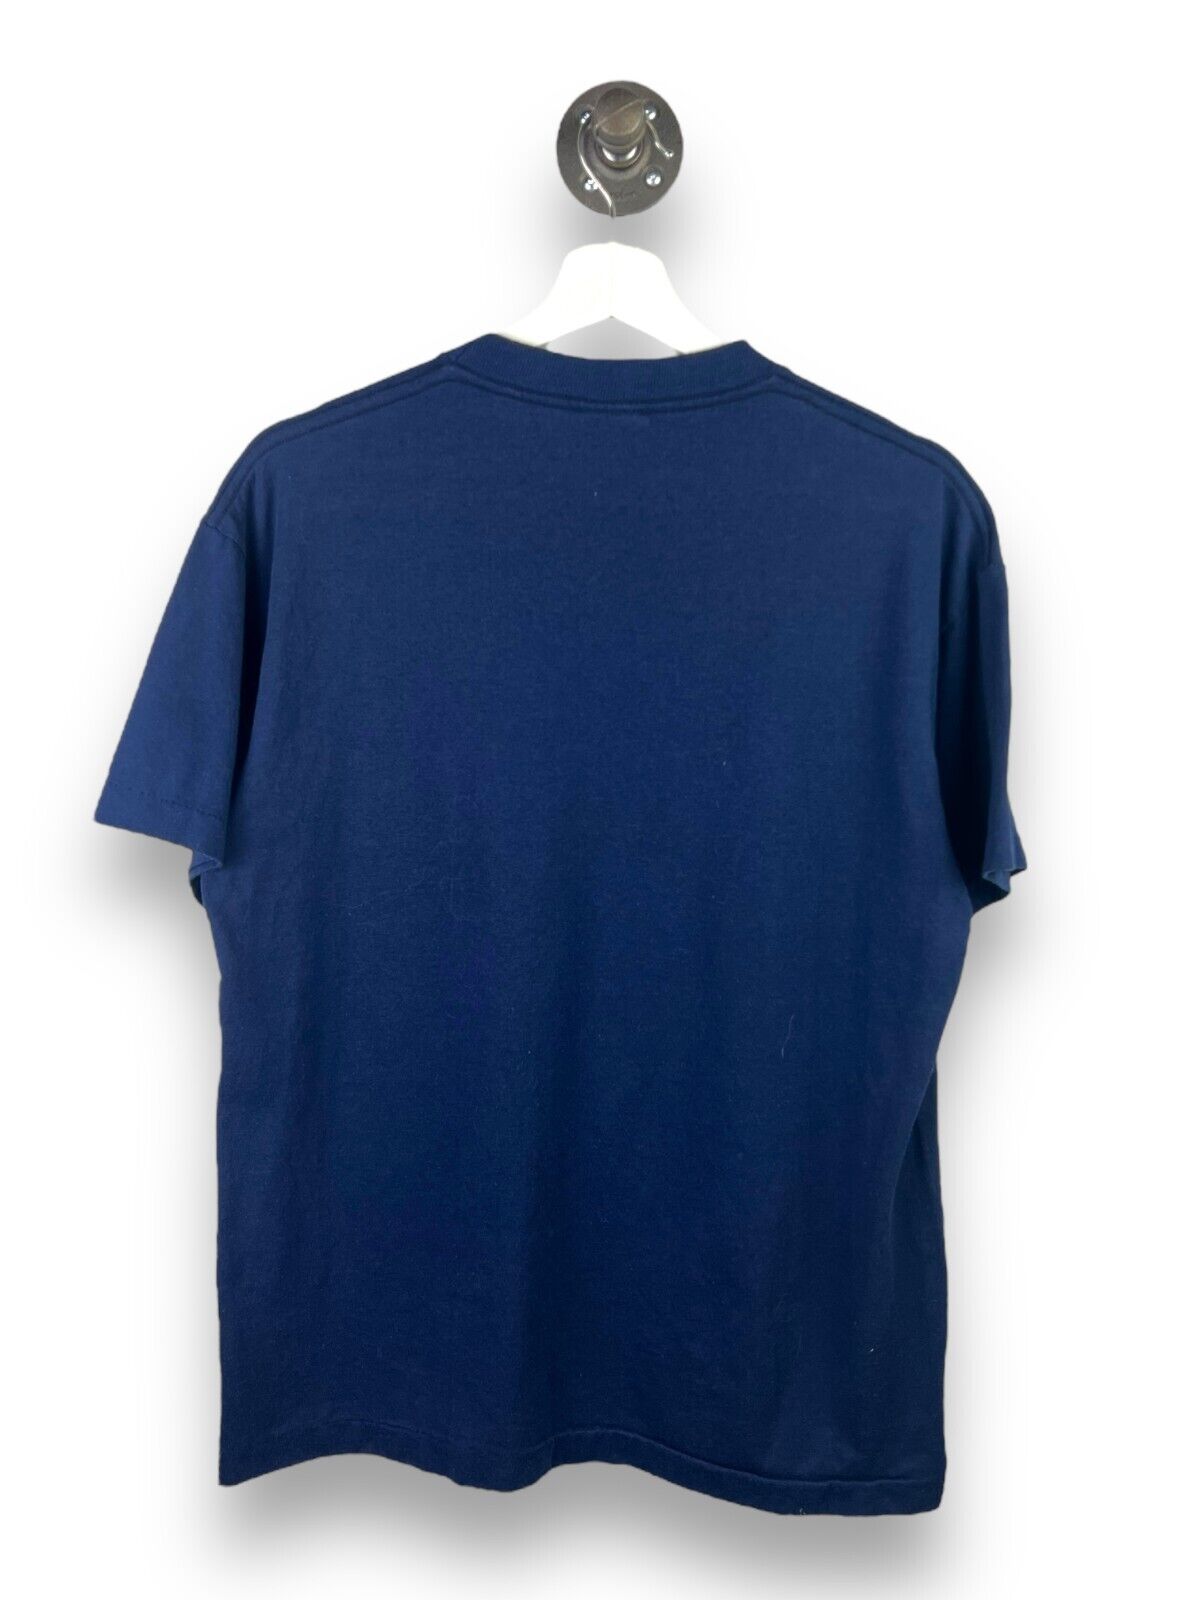 Vintage 90s Toronto Blue Jays MLB Graphic Logo T-Shirt Size Medium Blue